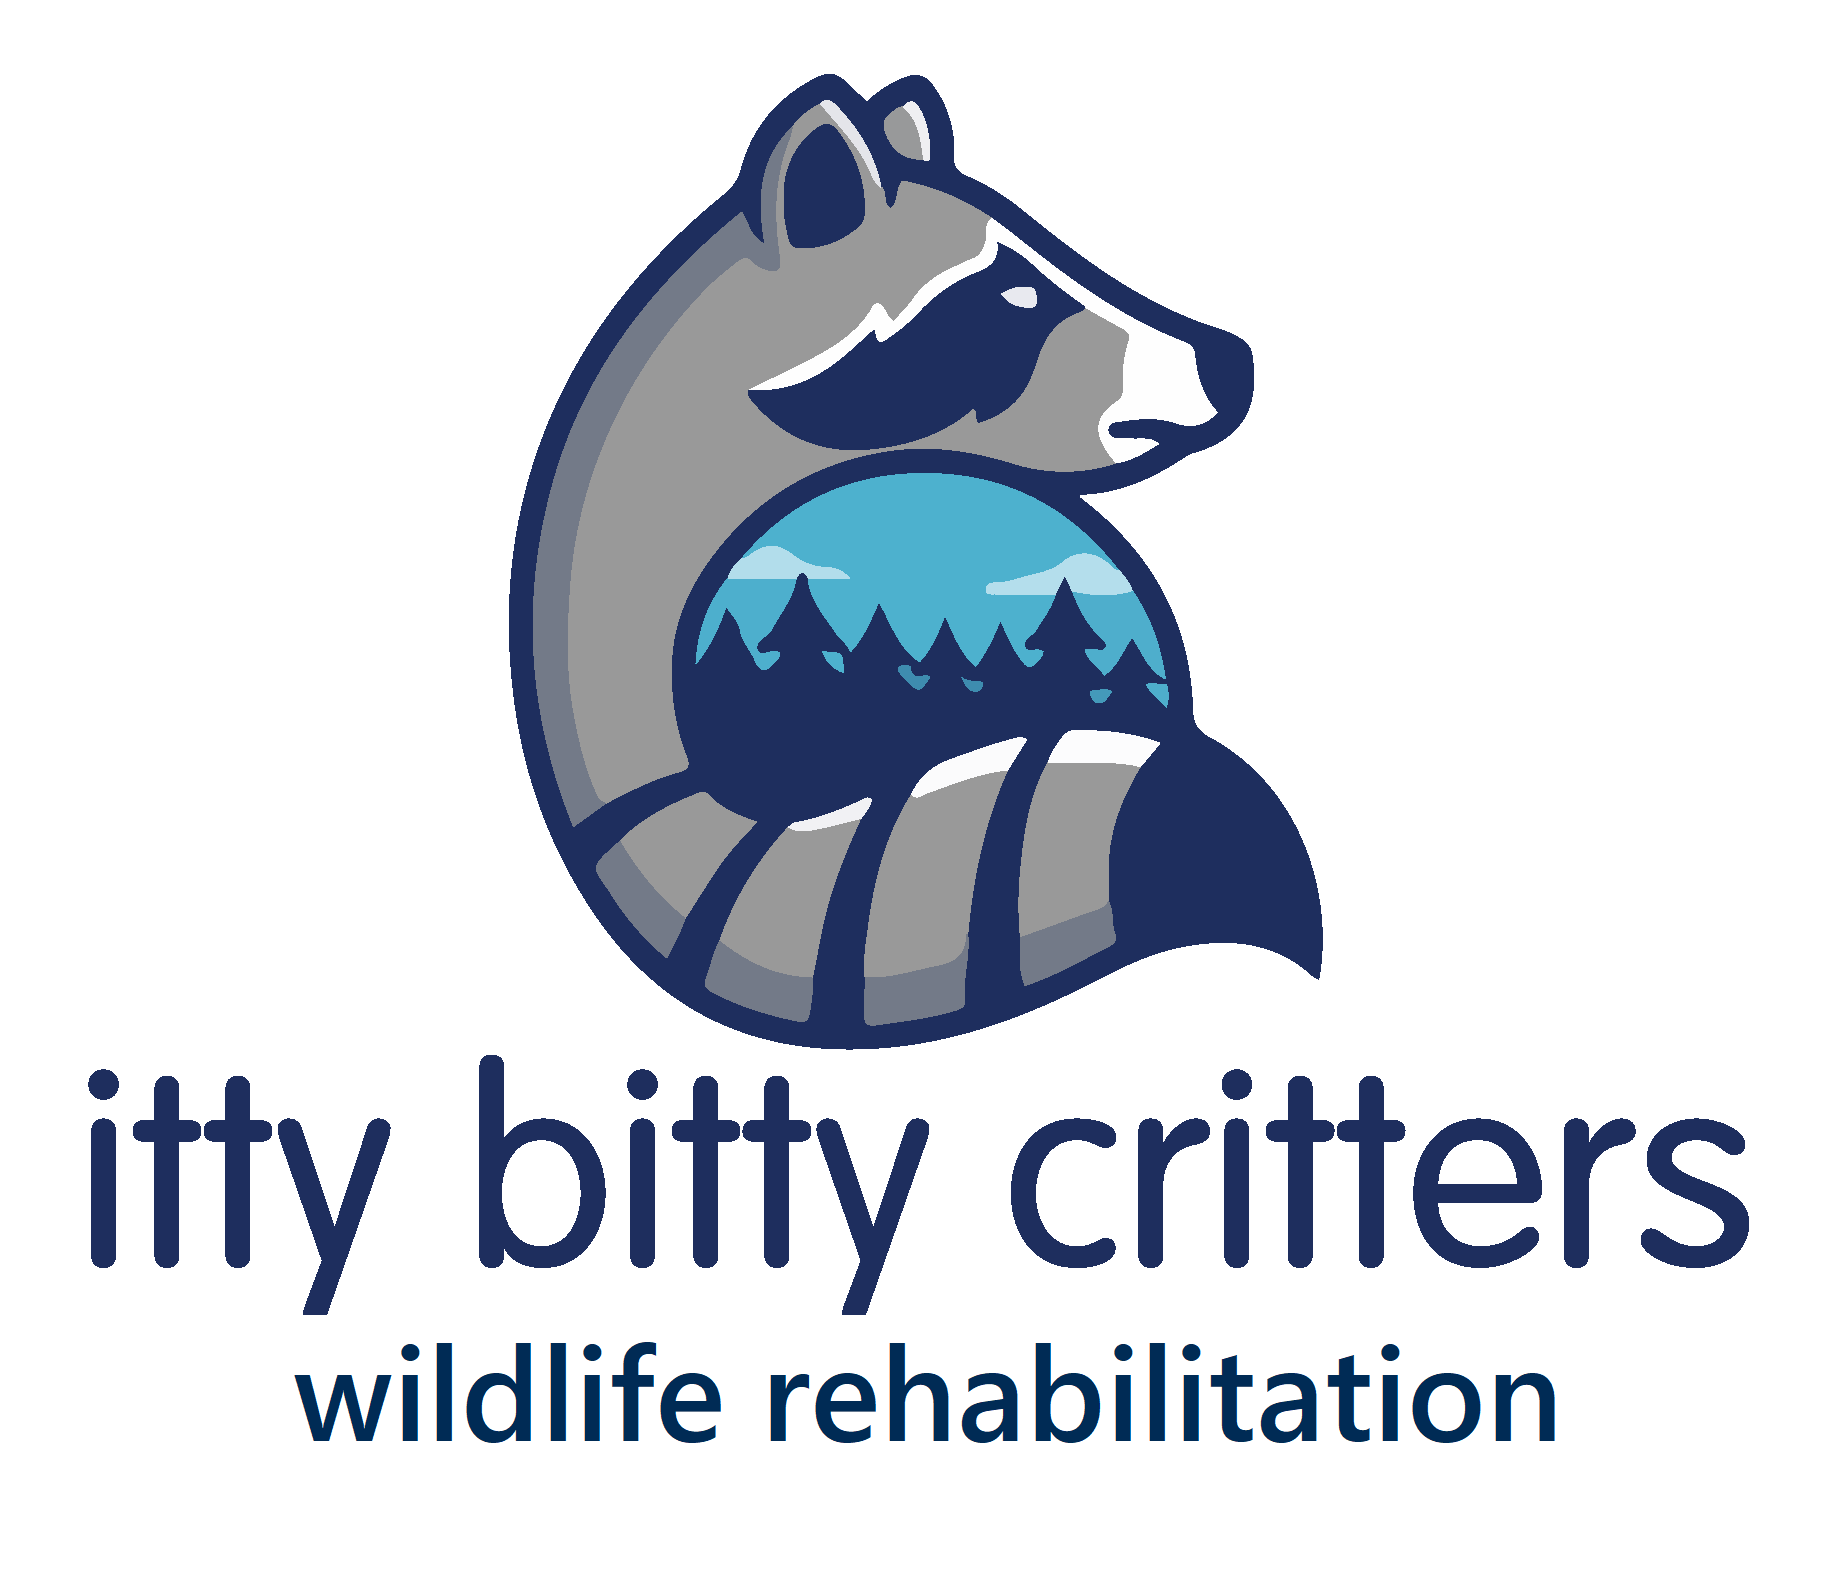 itty bitty critters wildlife rehabilitation